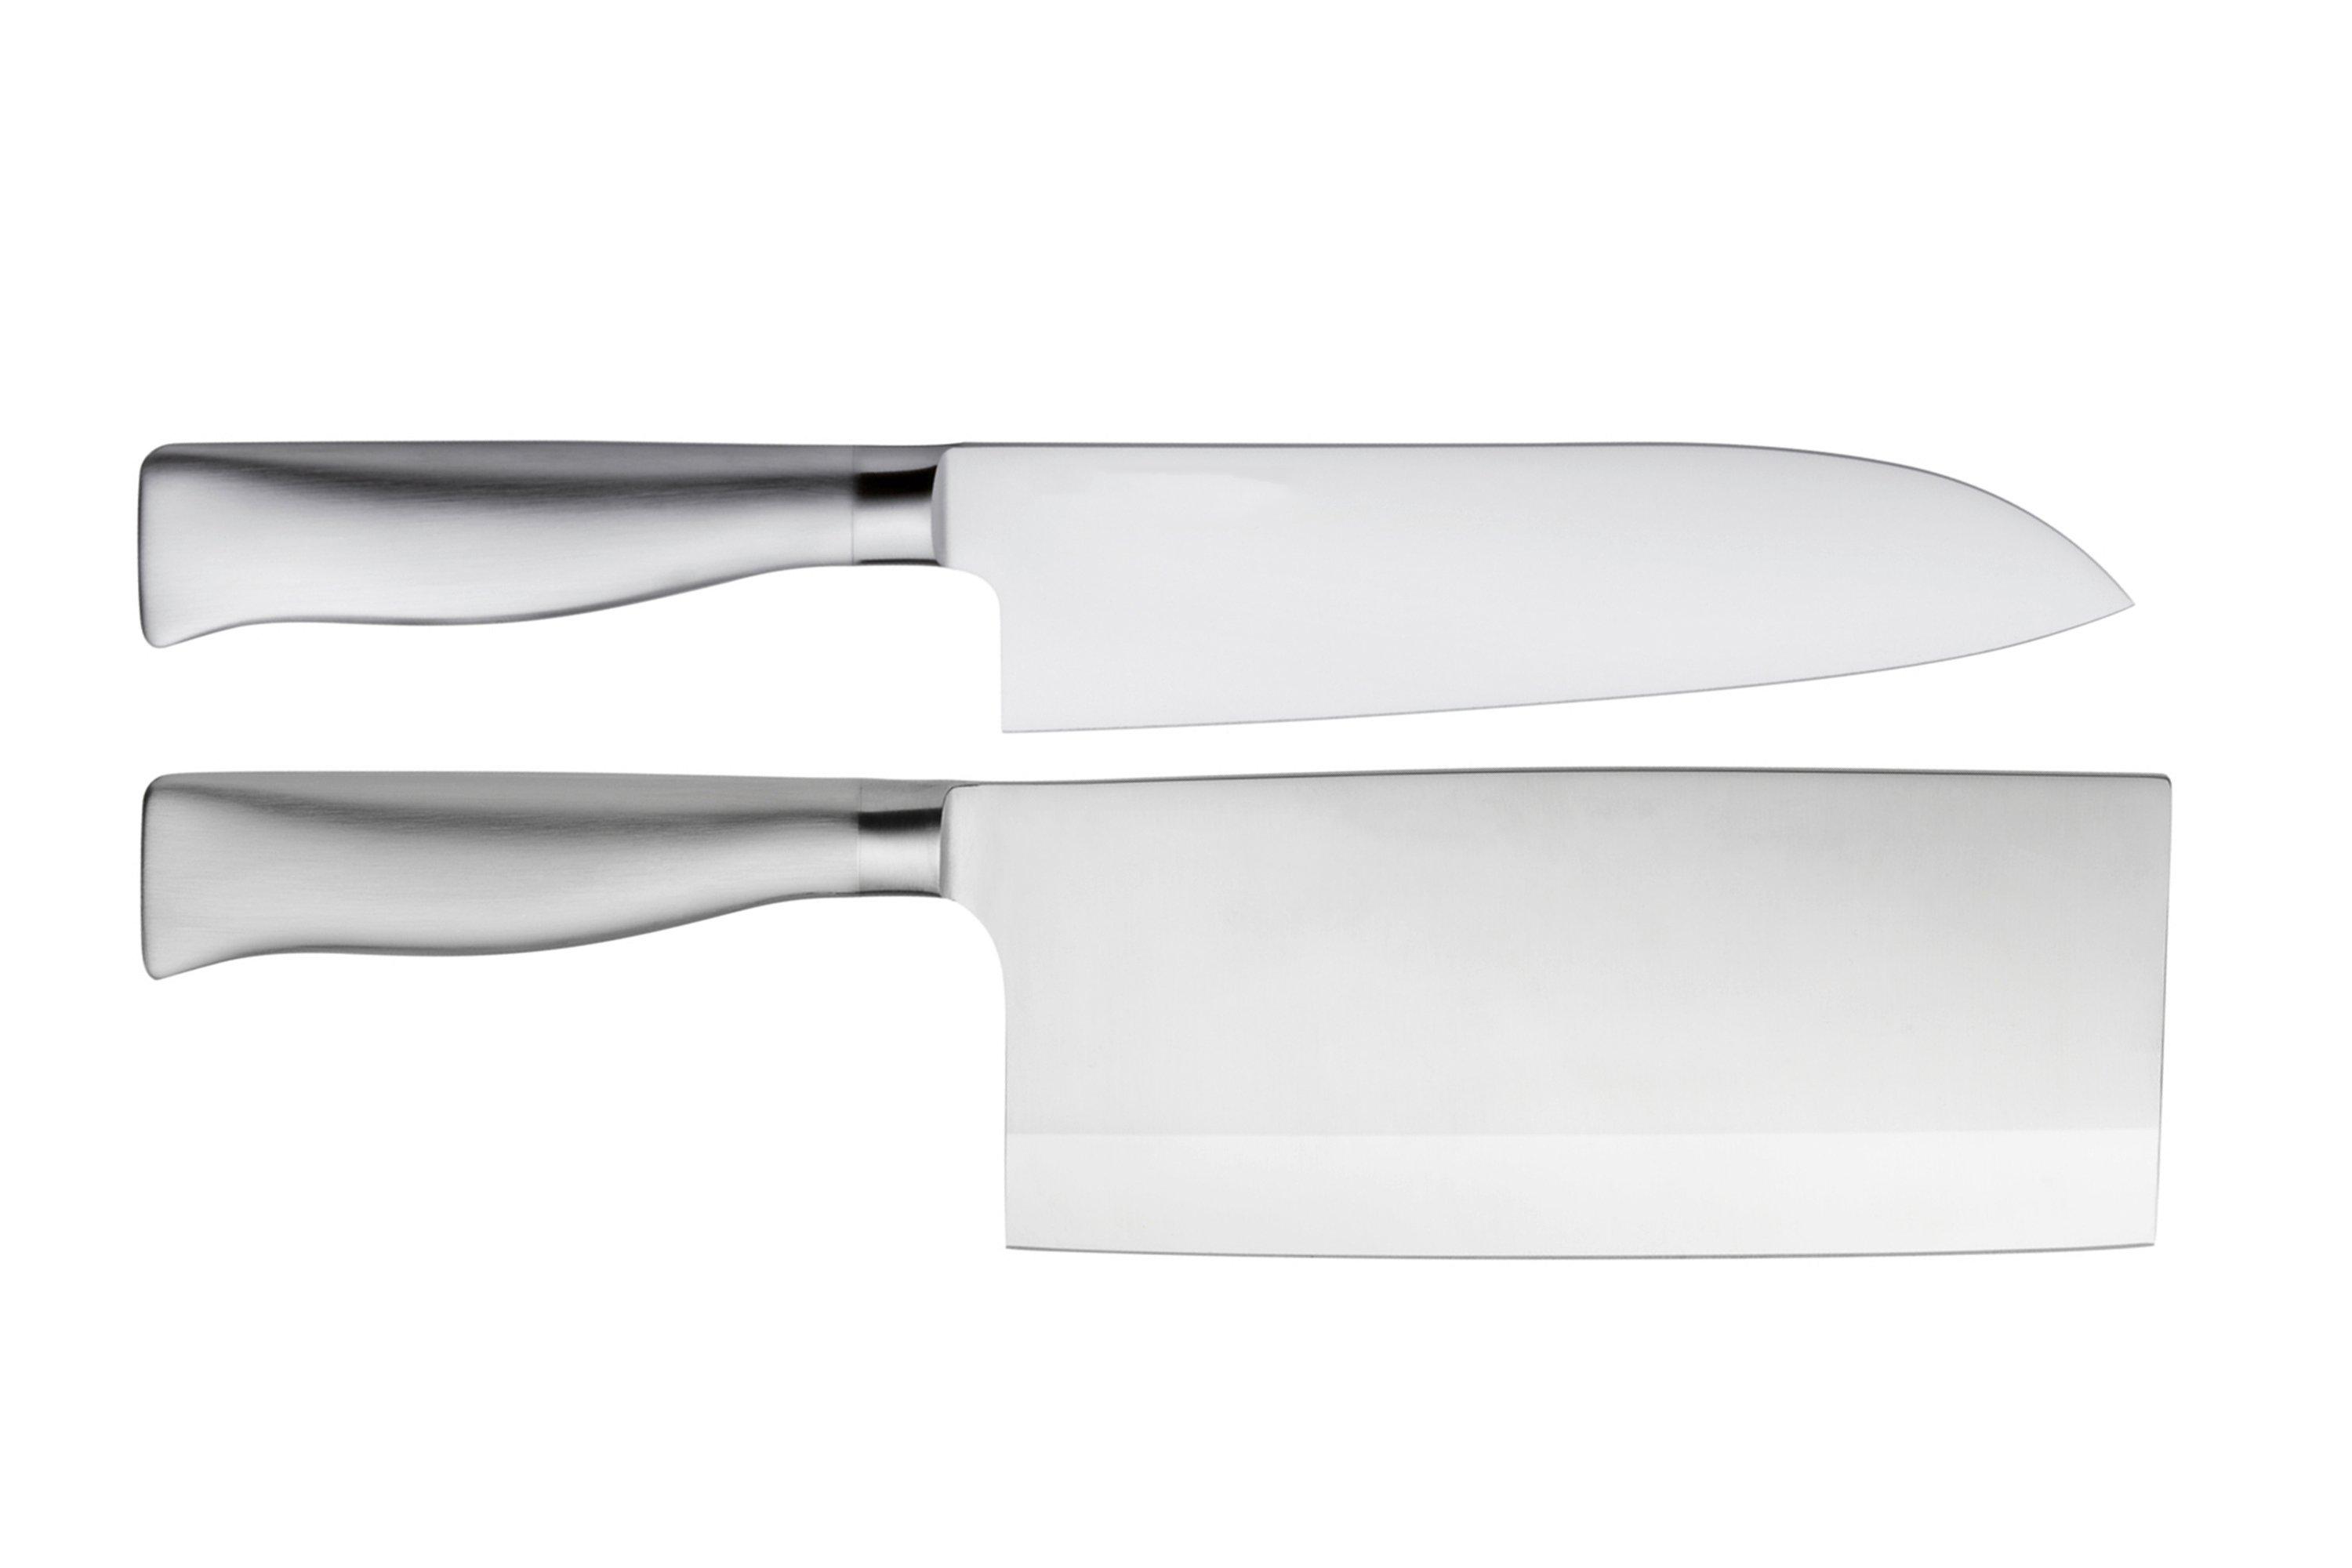 knife | Asian Grand Gourmet WMF 1882139992 set kitchen 2-piece at Advantageously shopping